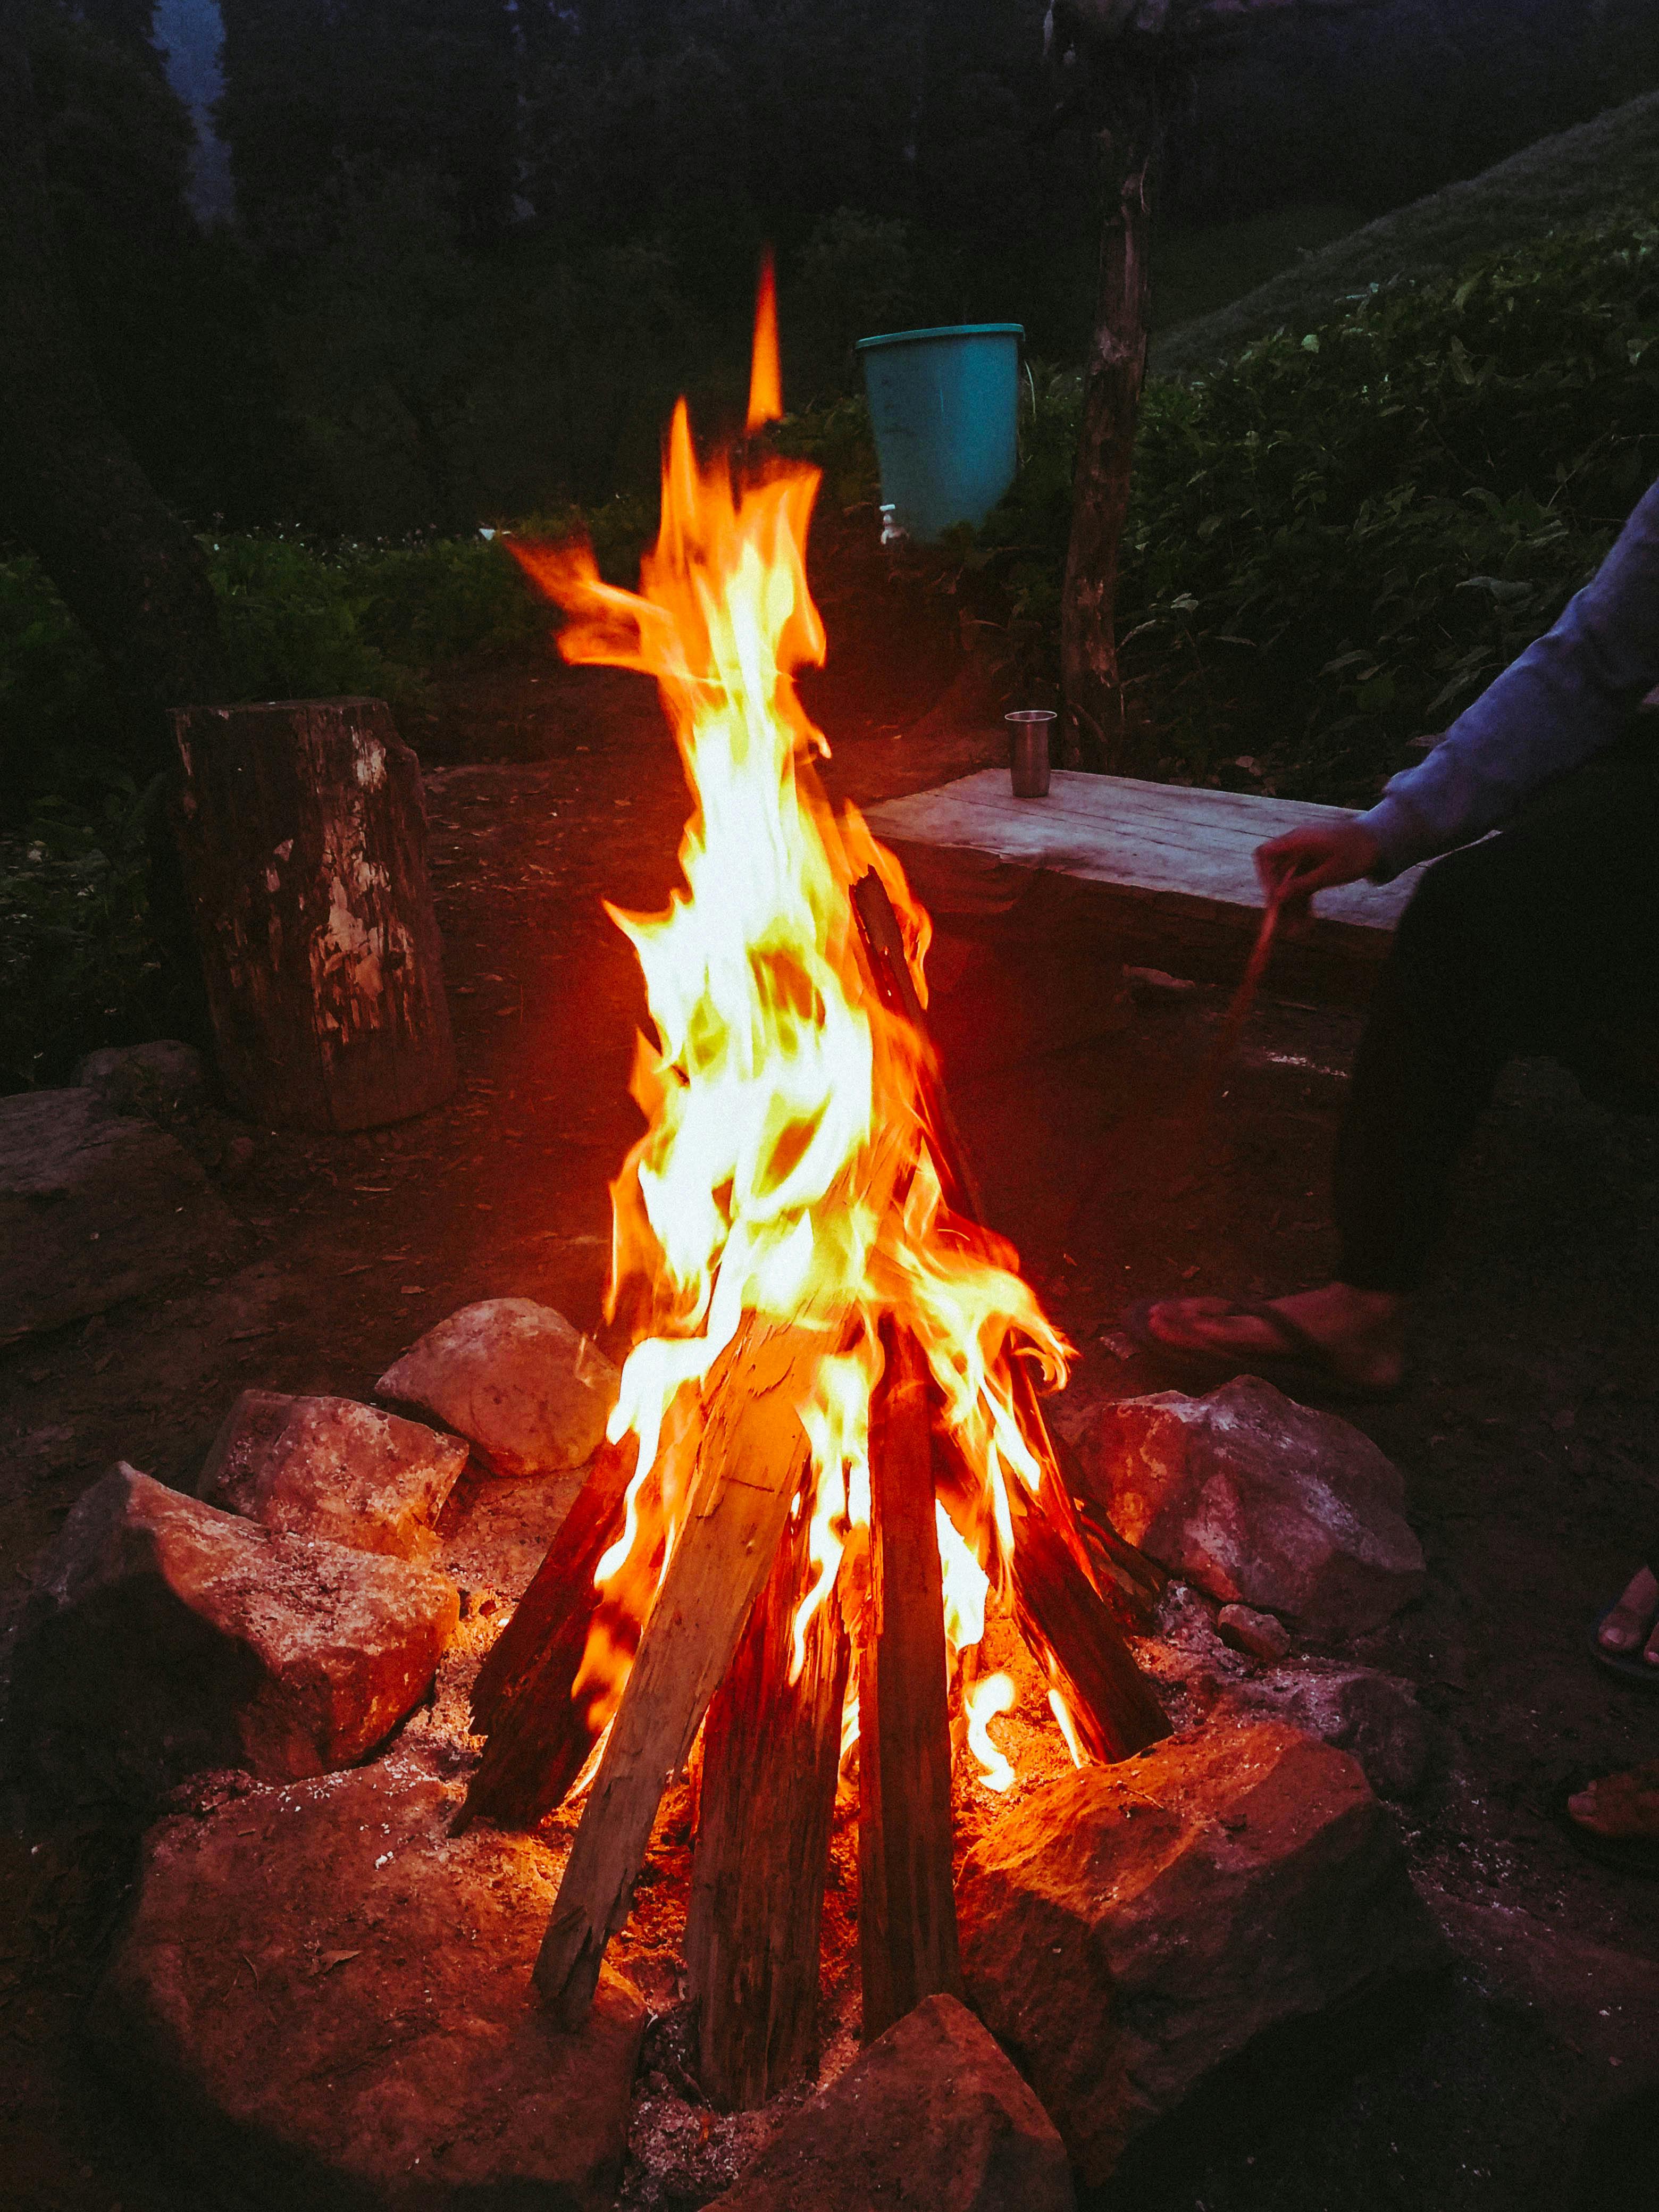 100 Amazing Campfire Photos Pexels Free Stock Photos